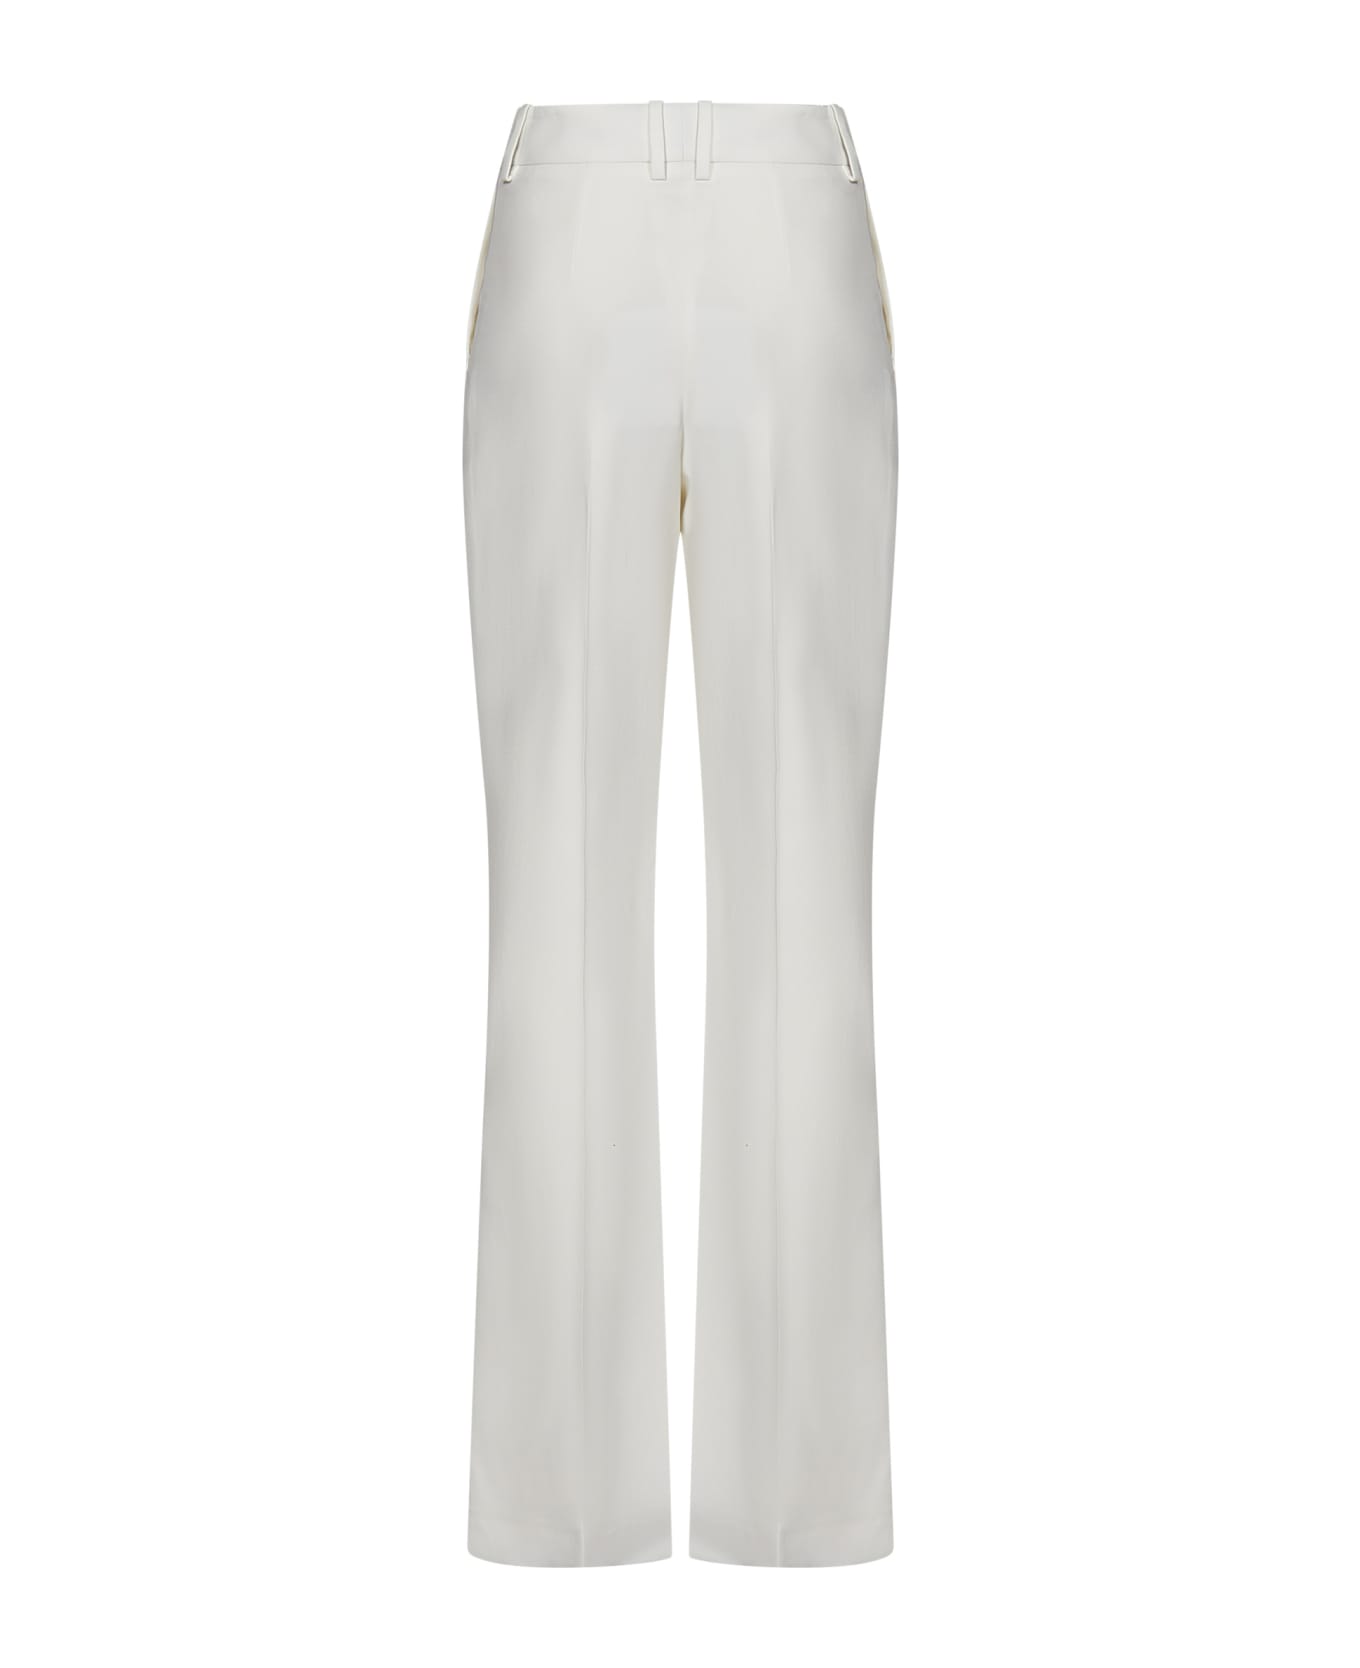 Balmain Paris Trousers - White